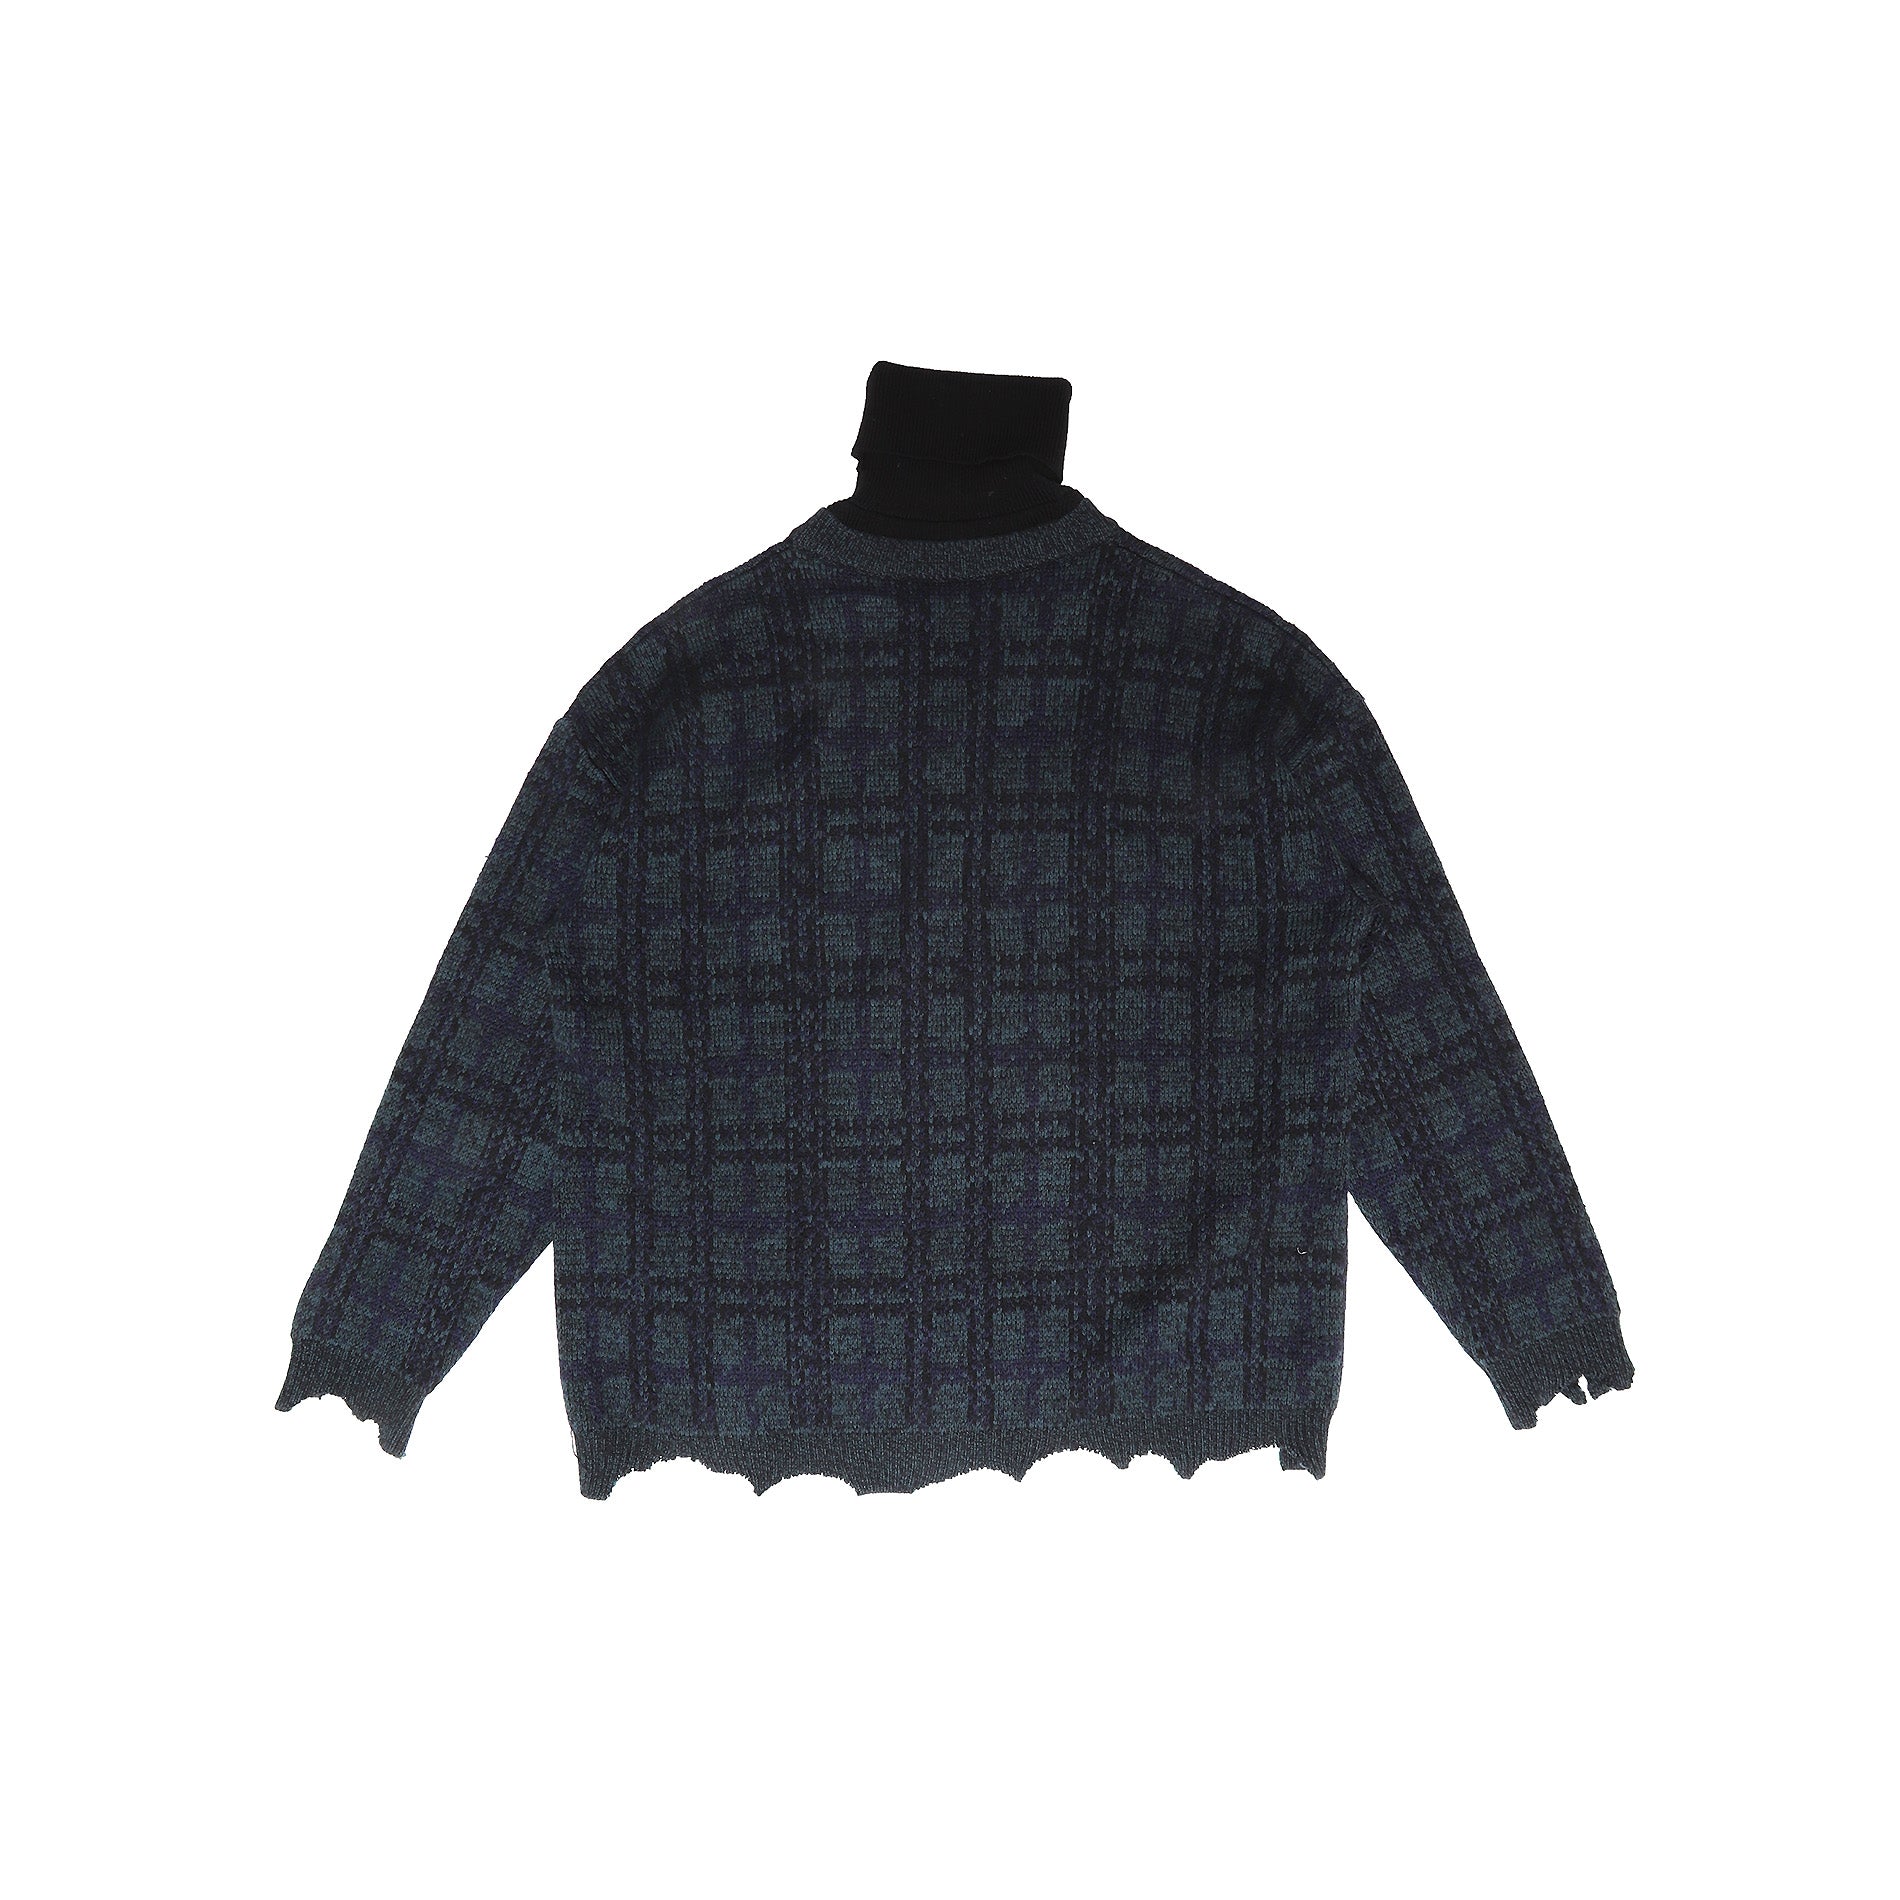 Balenciaga Oversized Distressed Turtleneck Knit Sweater